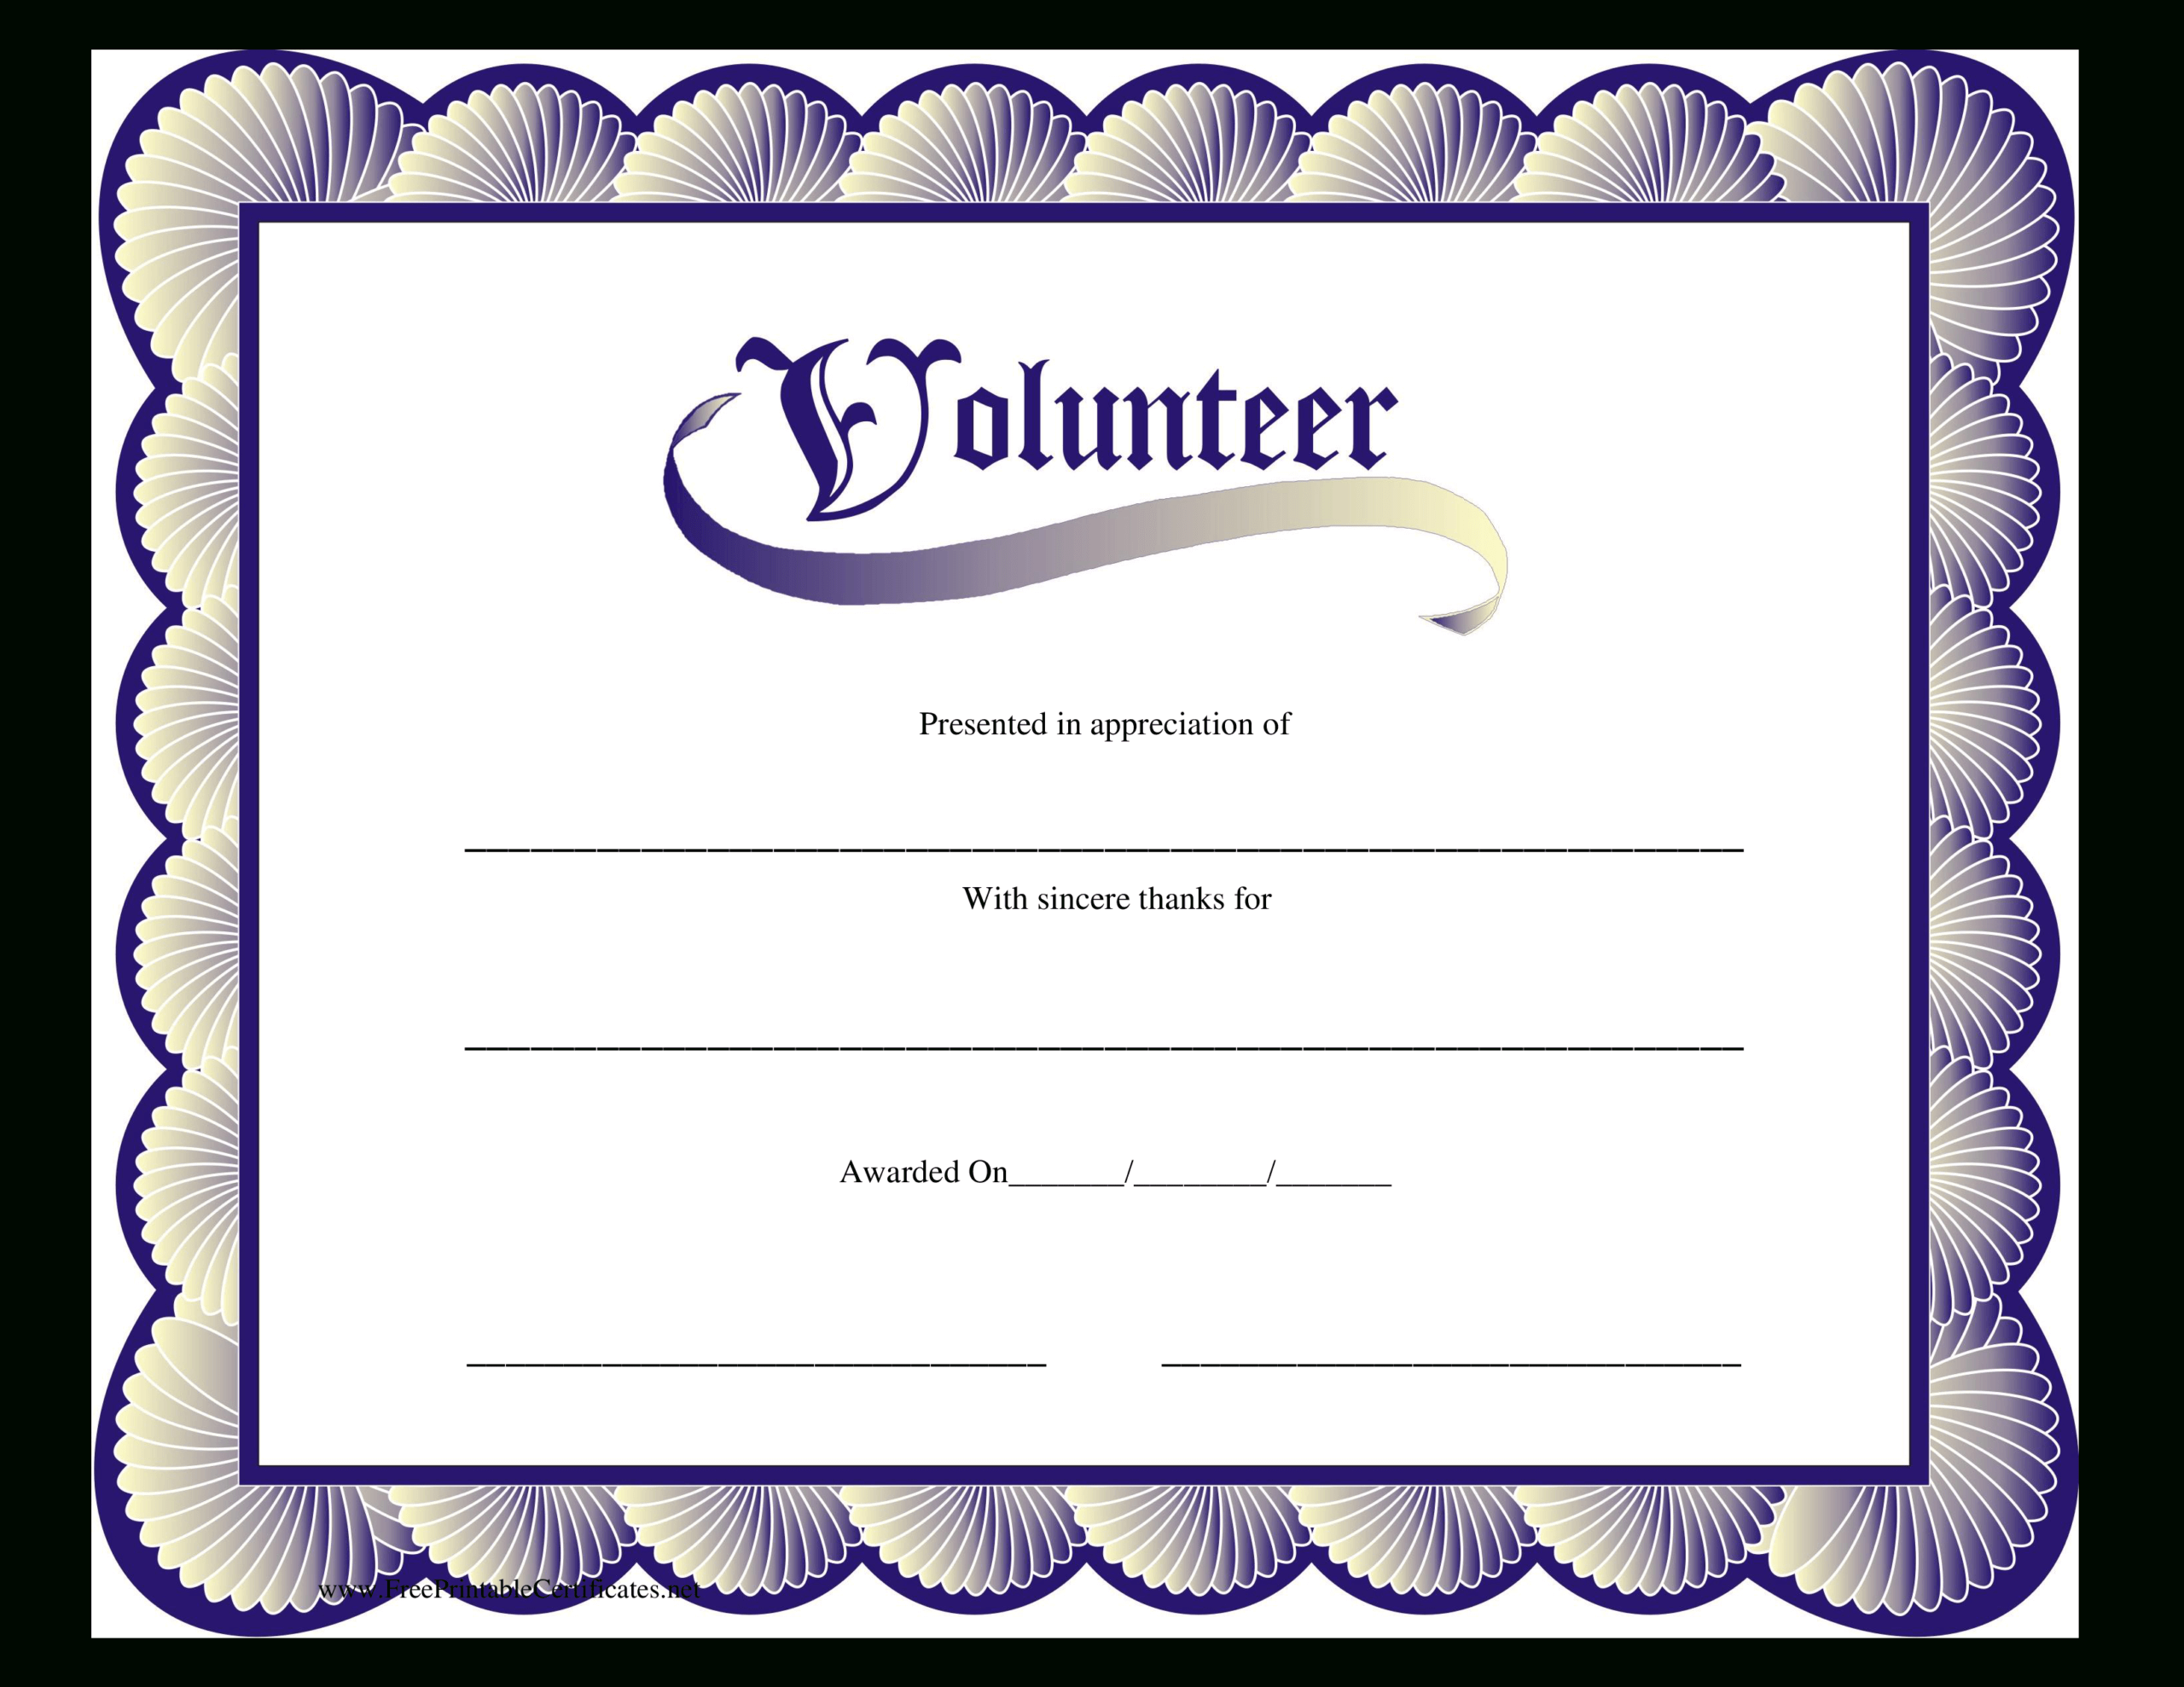 Volunteer Certificate | Templates At Allbusinesstemplates Regarding Volunteer Certificate Templates